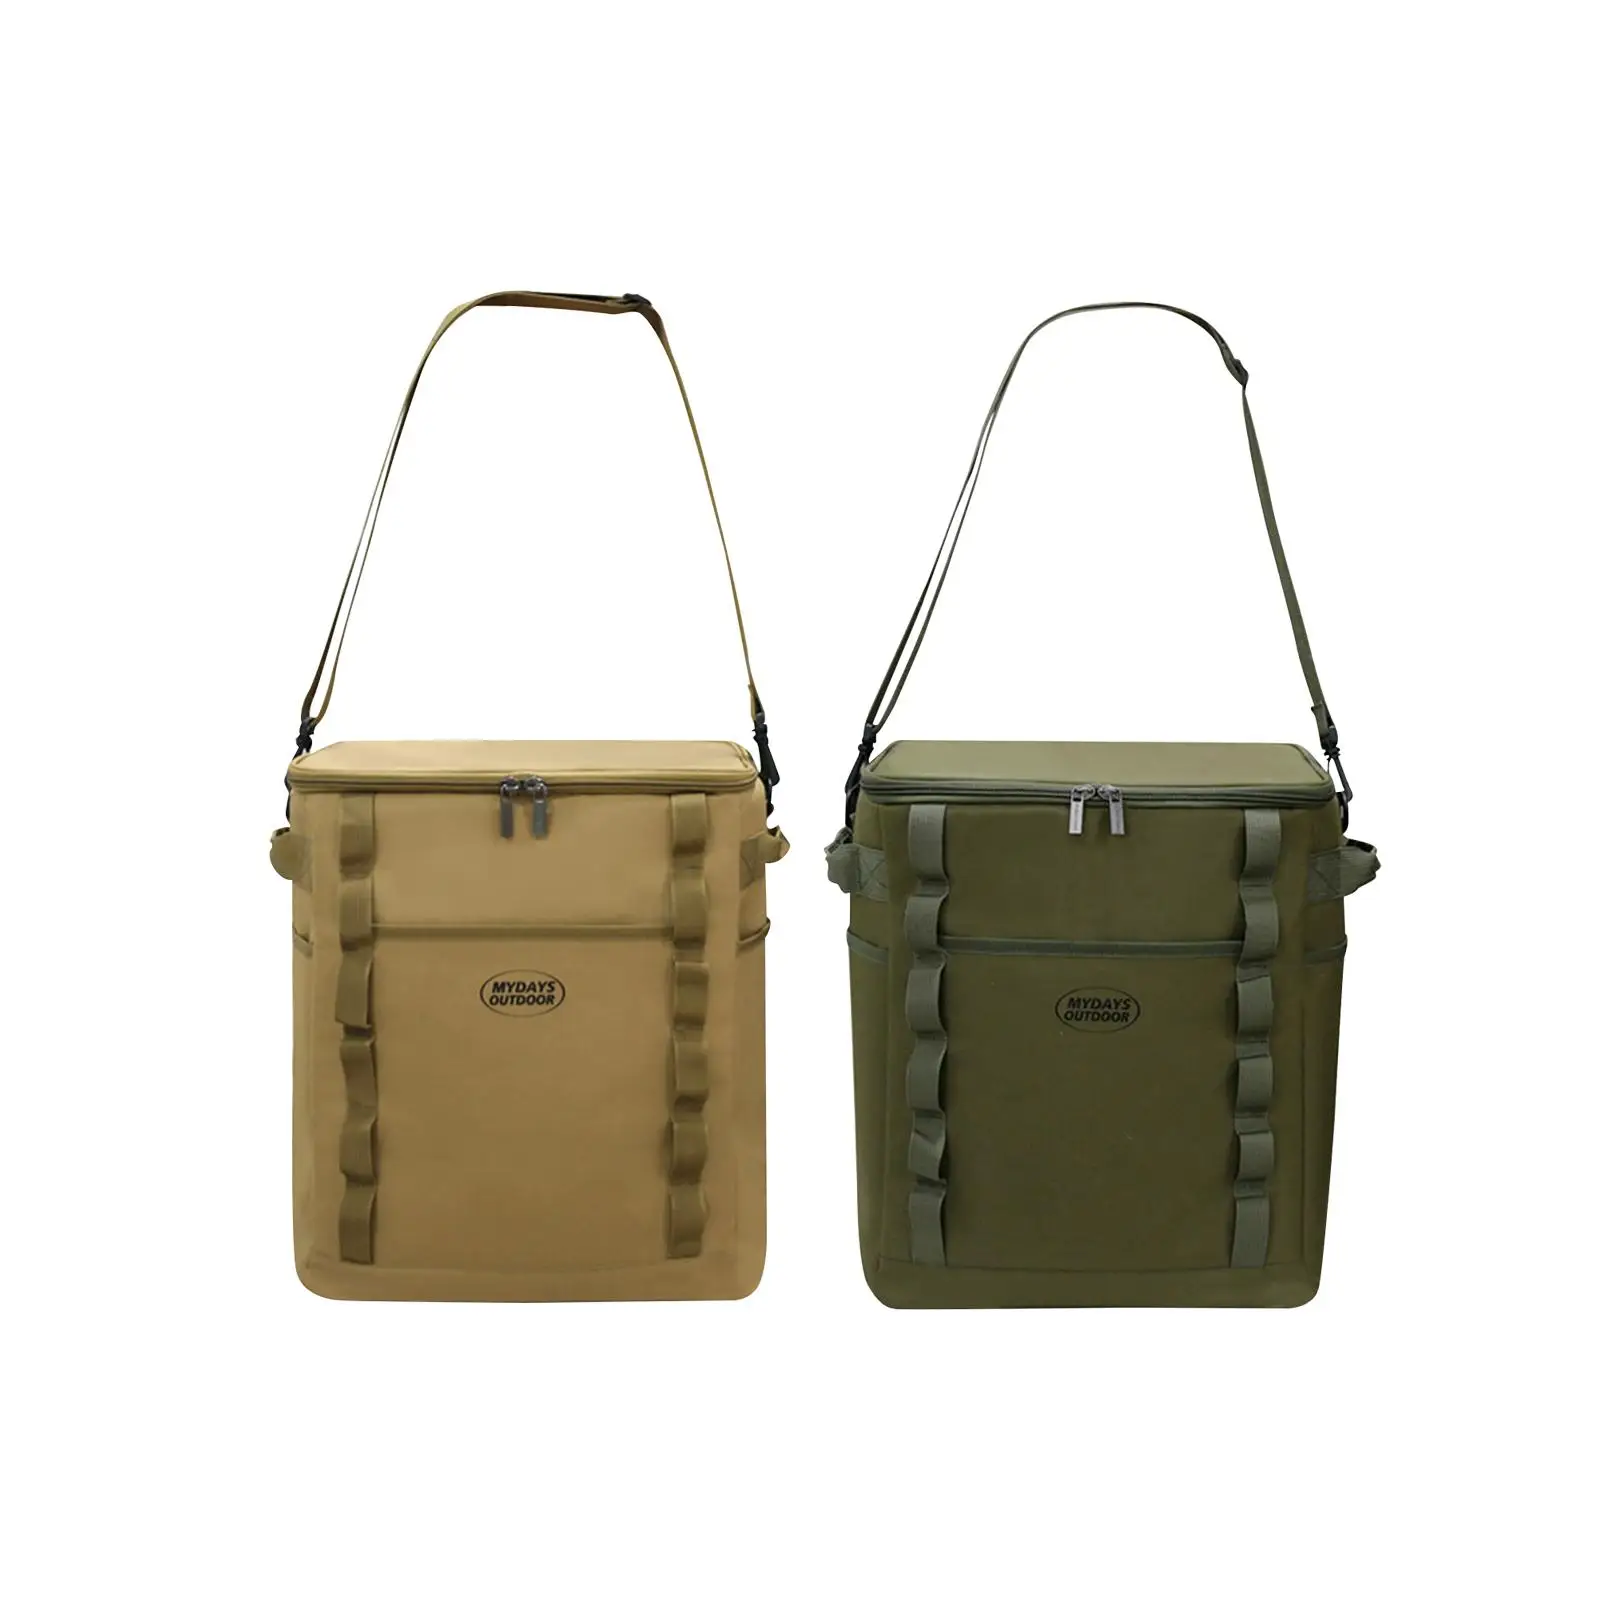 Camping Storage Bag Compact Basket with Handle Waterproof Storage Picnic Bag Cooler Bag for BBQ Camping Beach Hiking Women Men